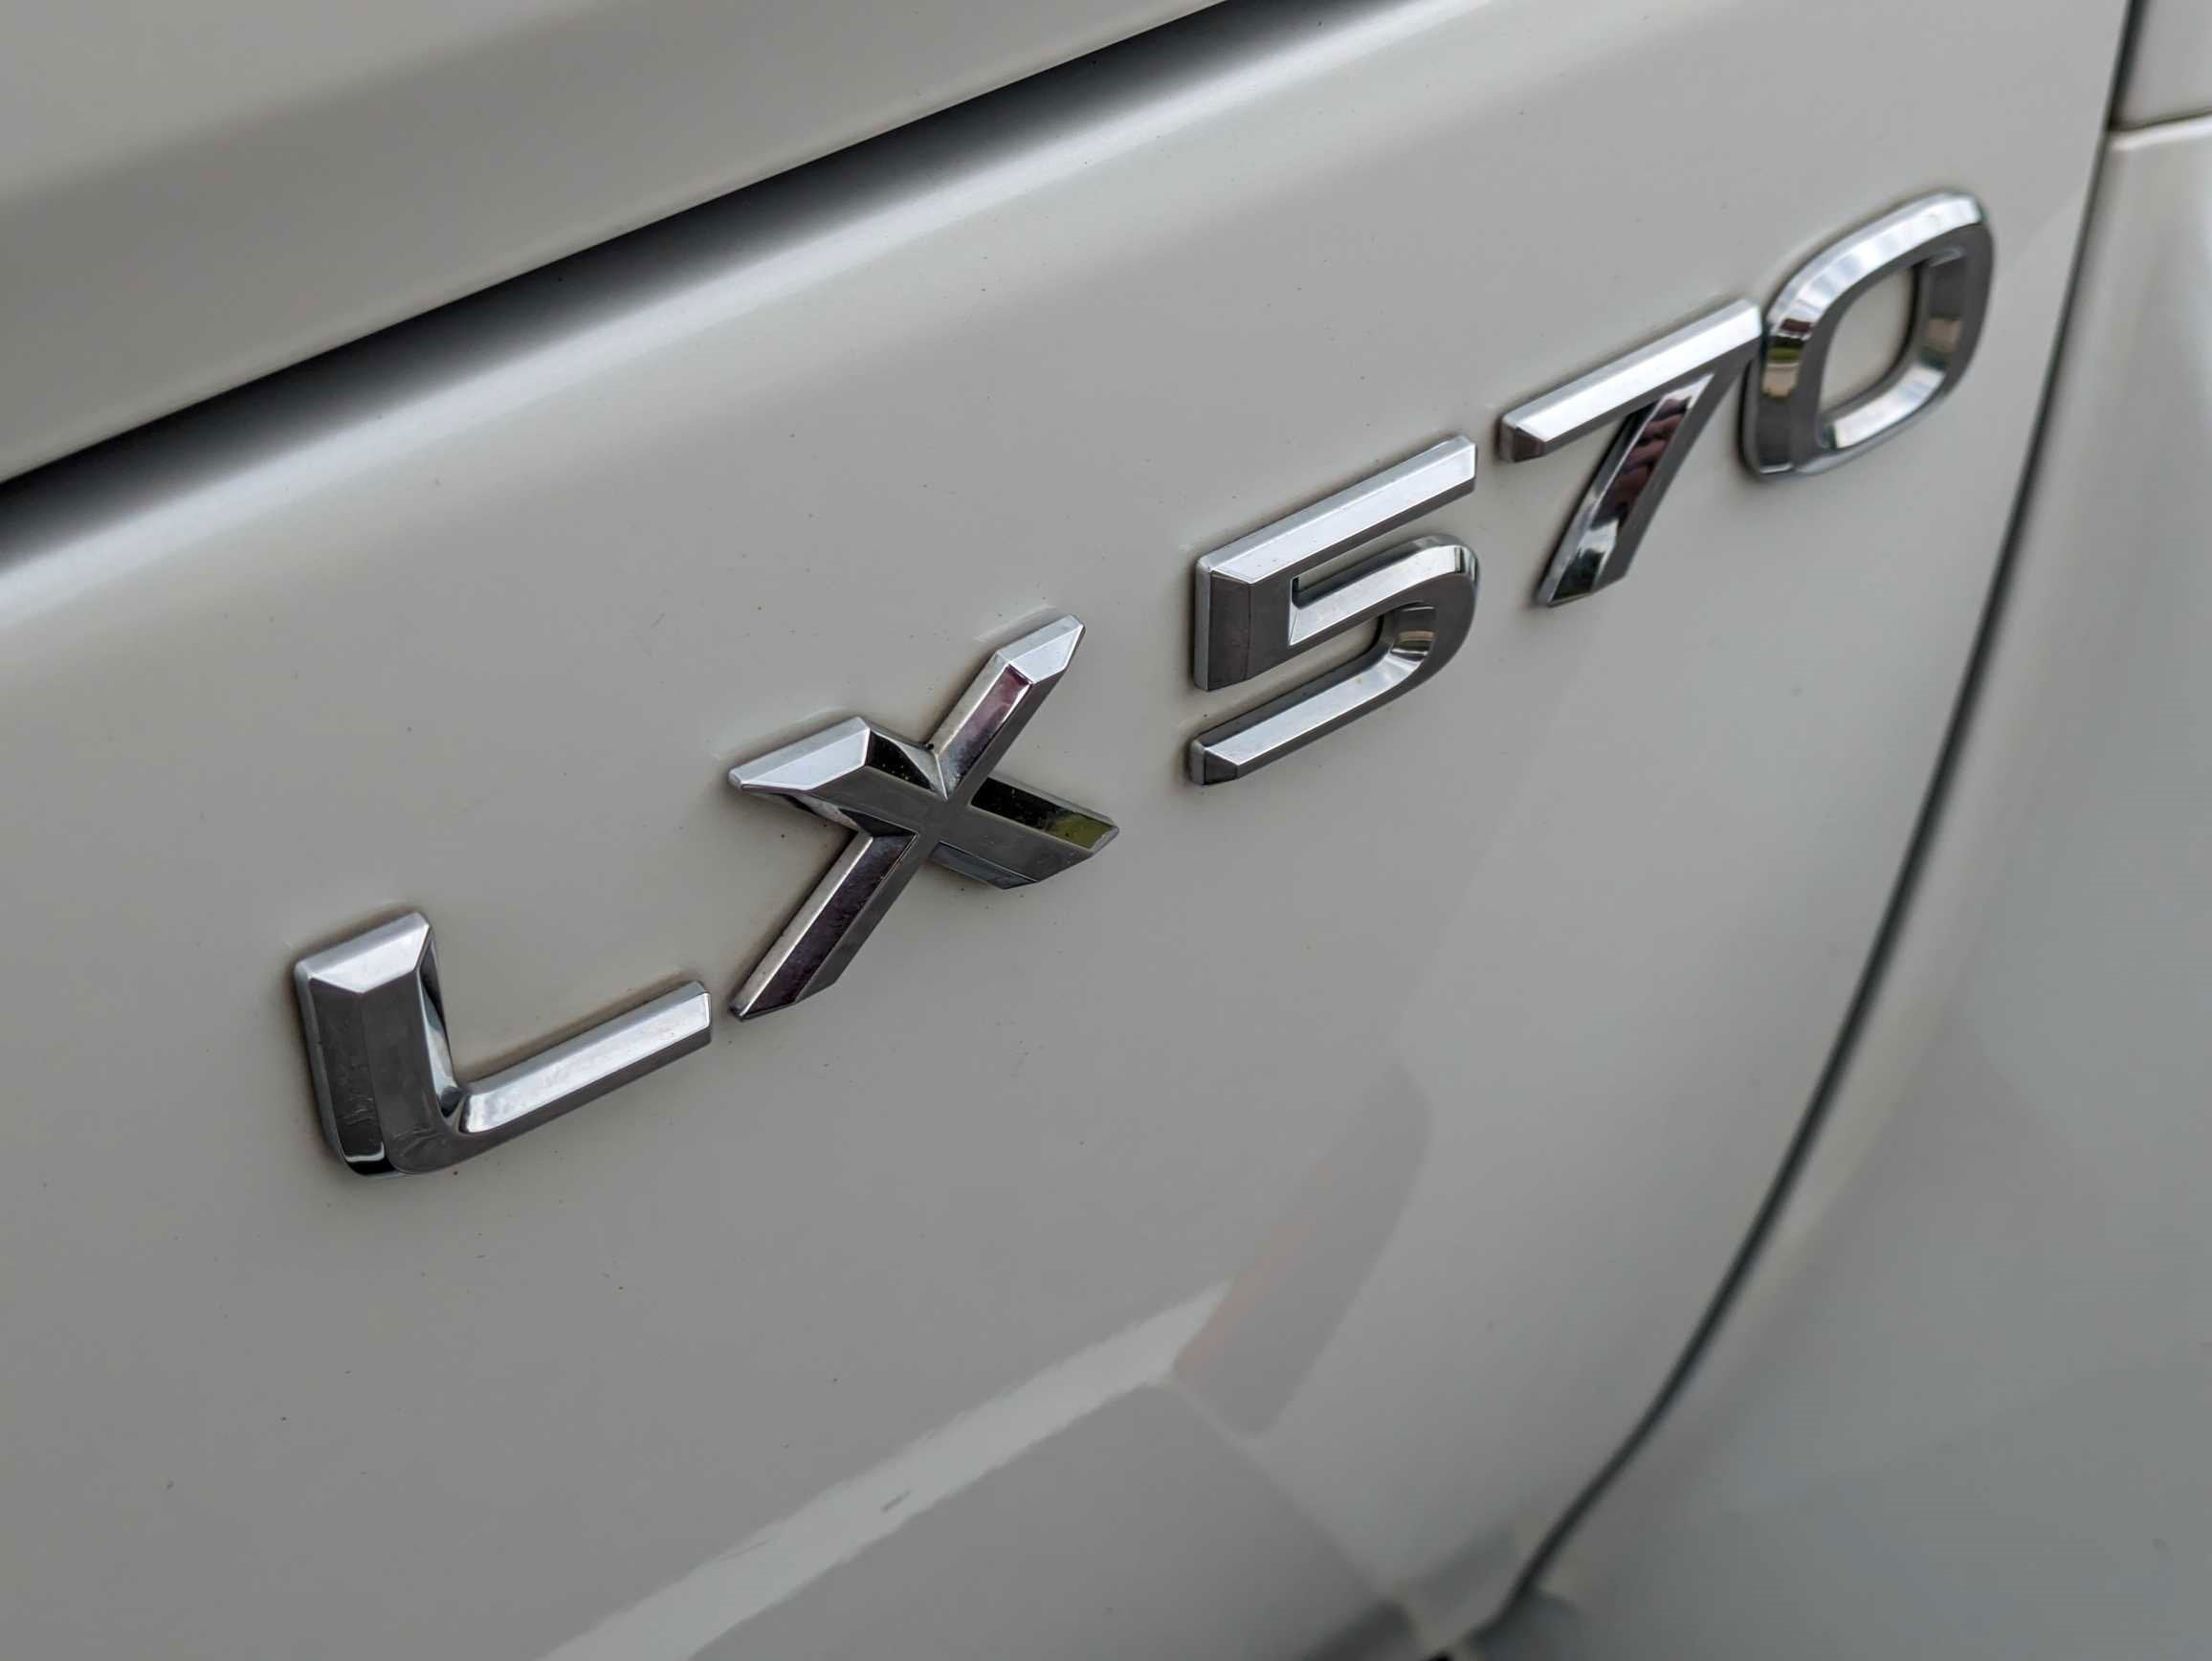 2017 Lexus LX LX 570